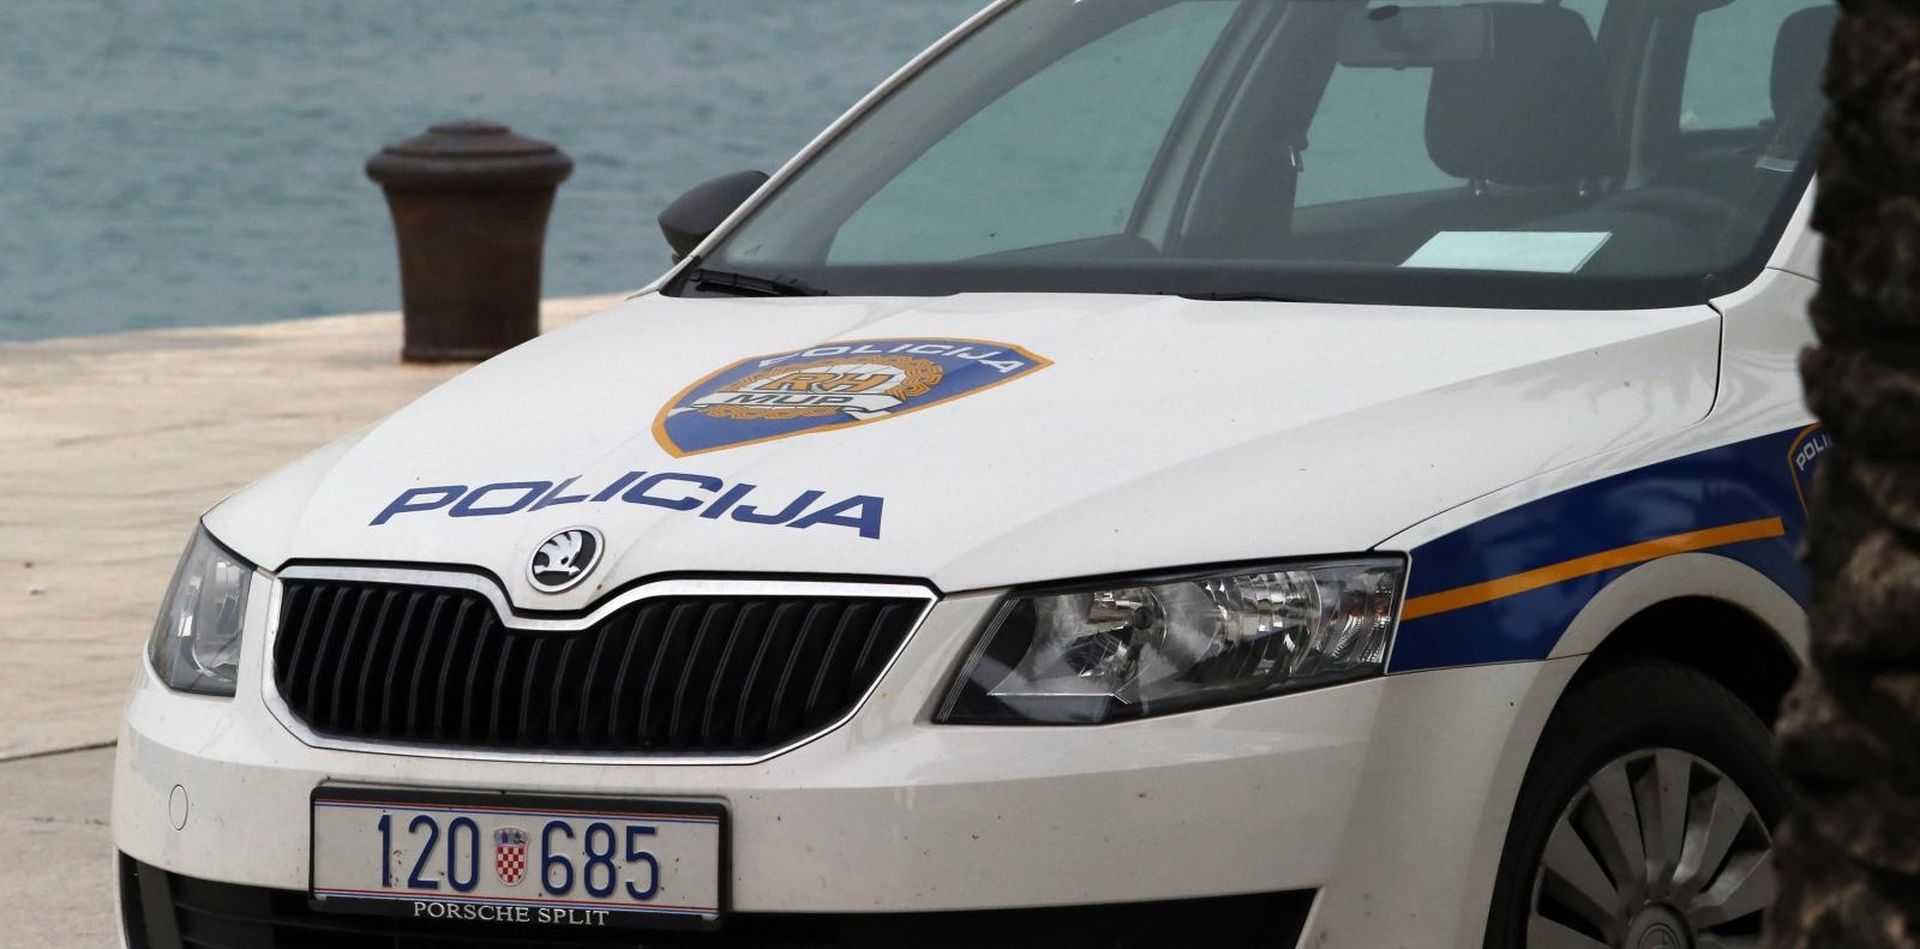 17.04.105., Split - Policija, automobi i policijske oznake.
Photo: Ivo Cagalj/PIXSELL